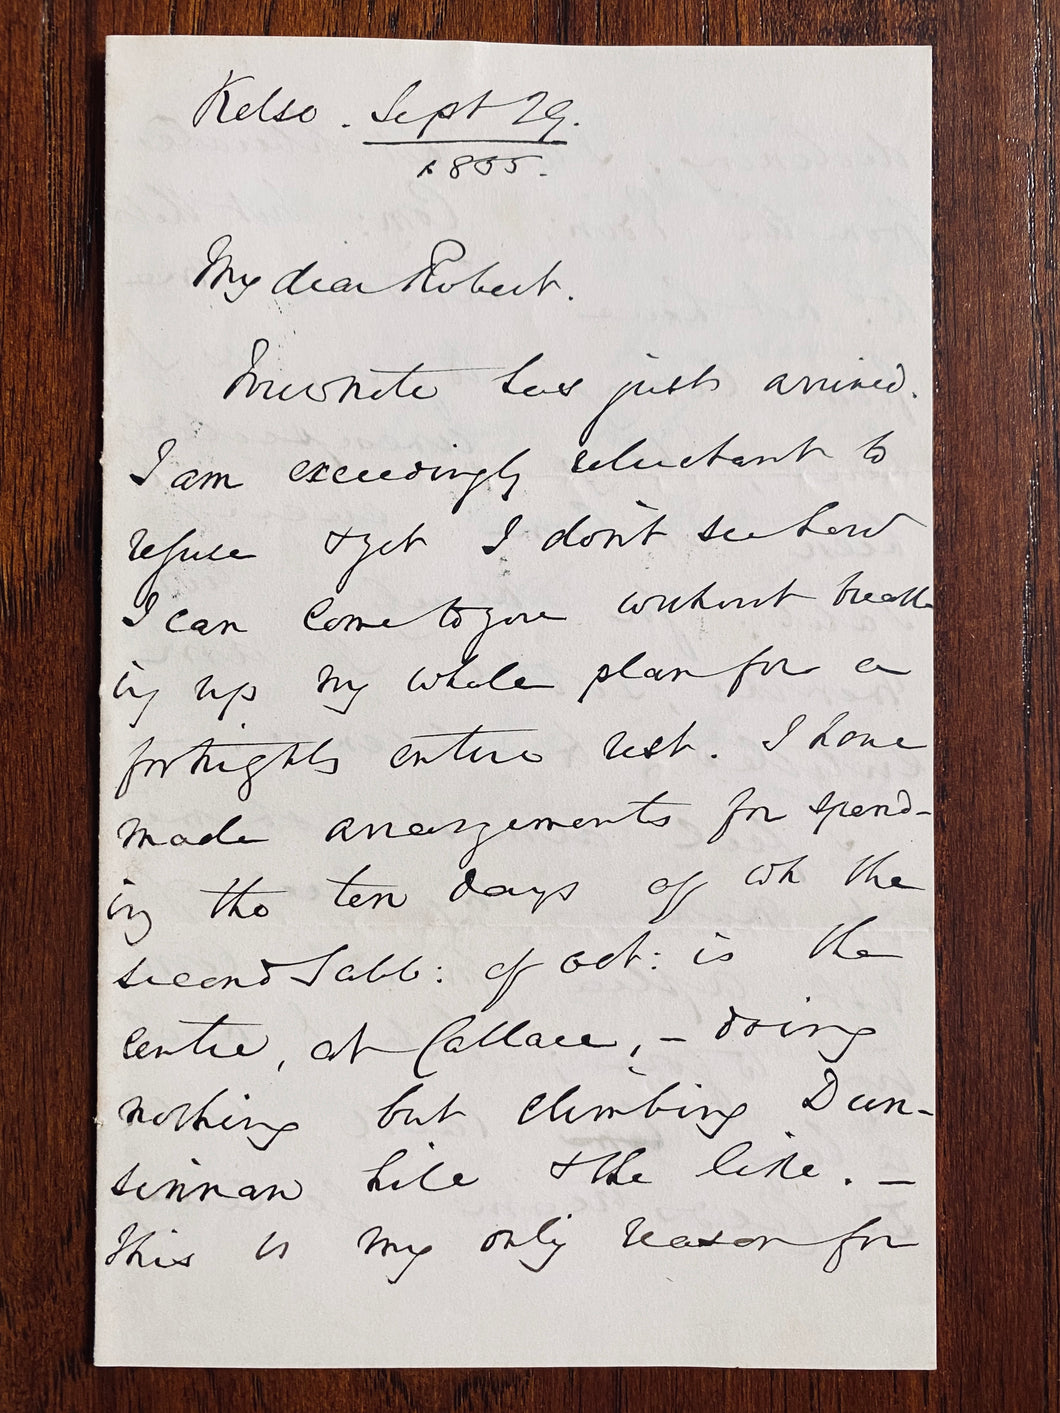 1855 HORATIUS BONAR. Superb Letter re: A Forced Sabbatical for Pastoral Burnout.